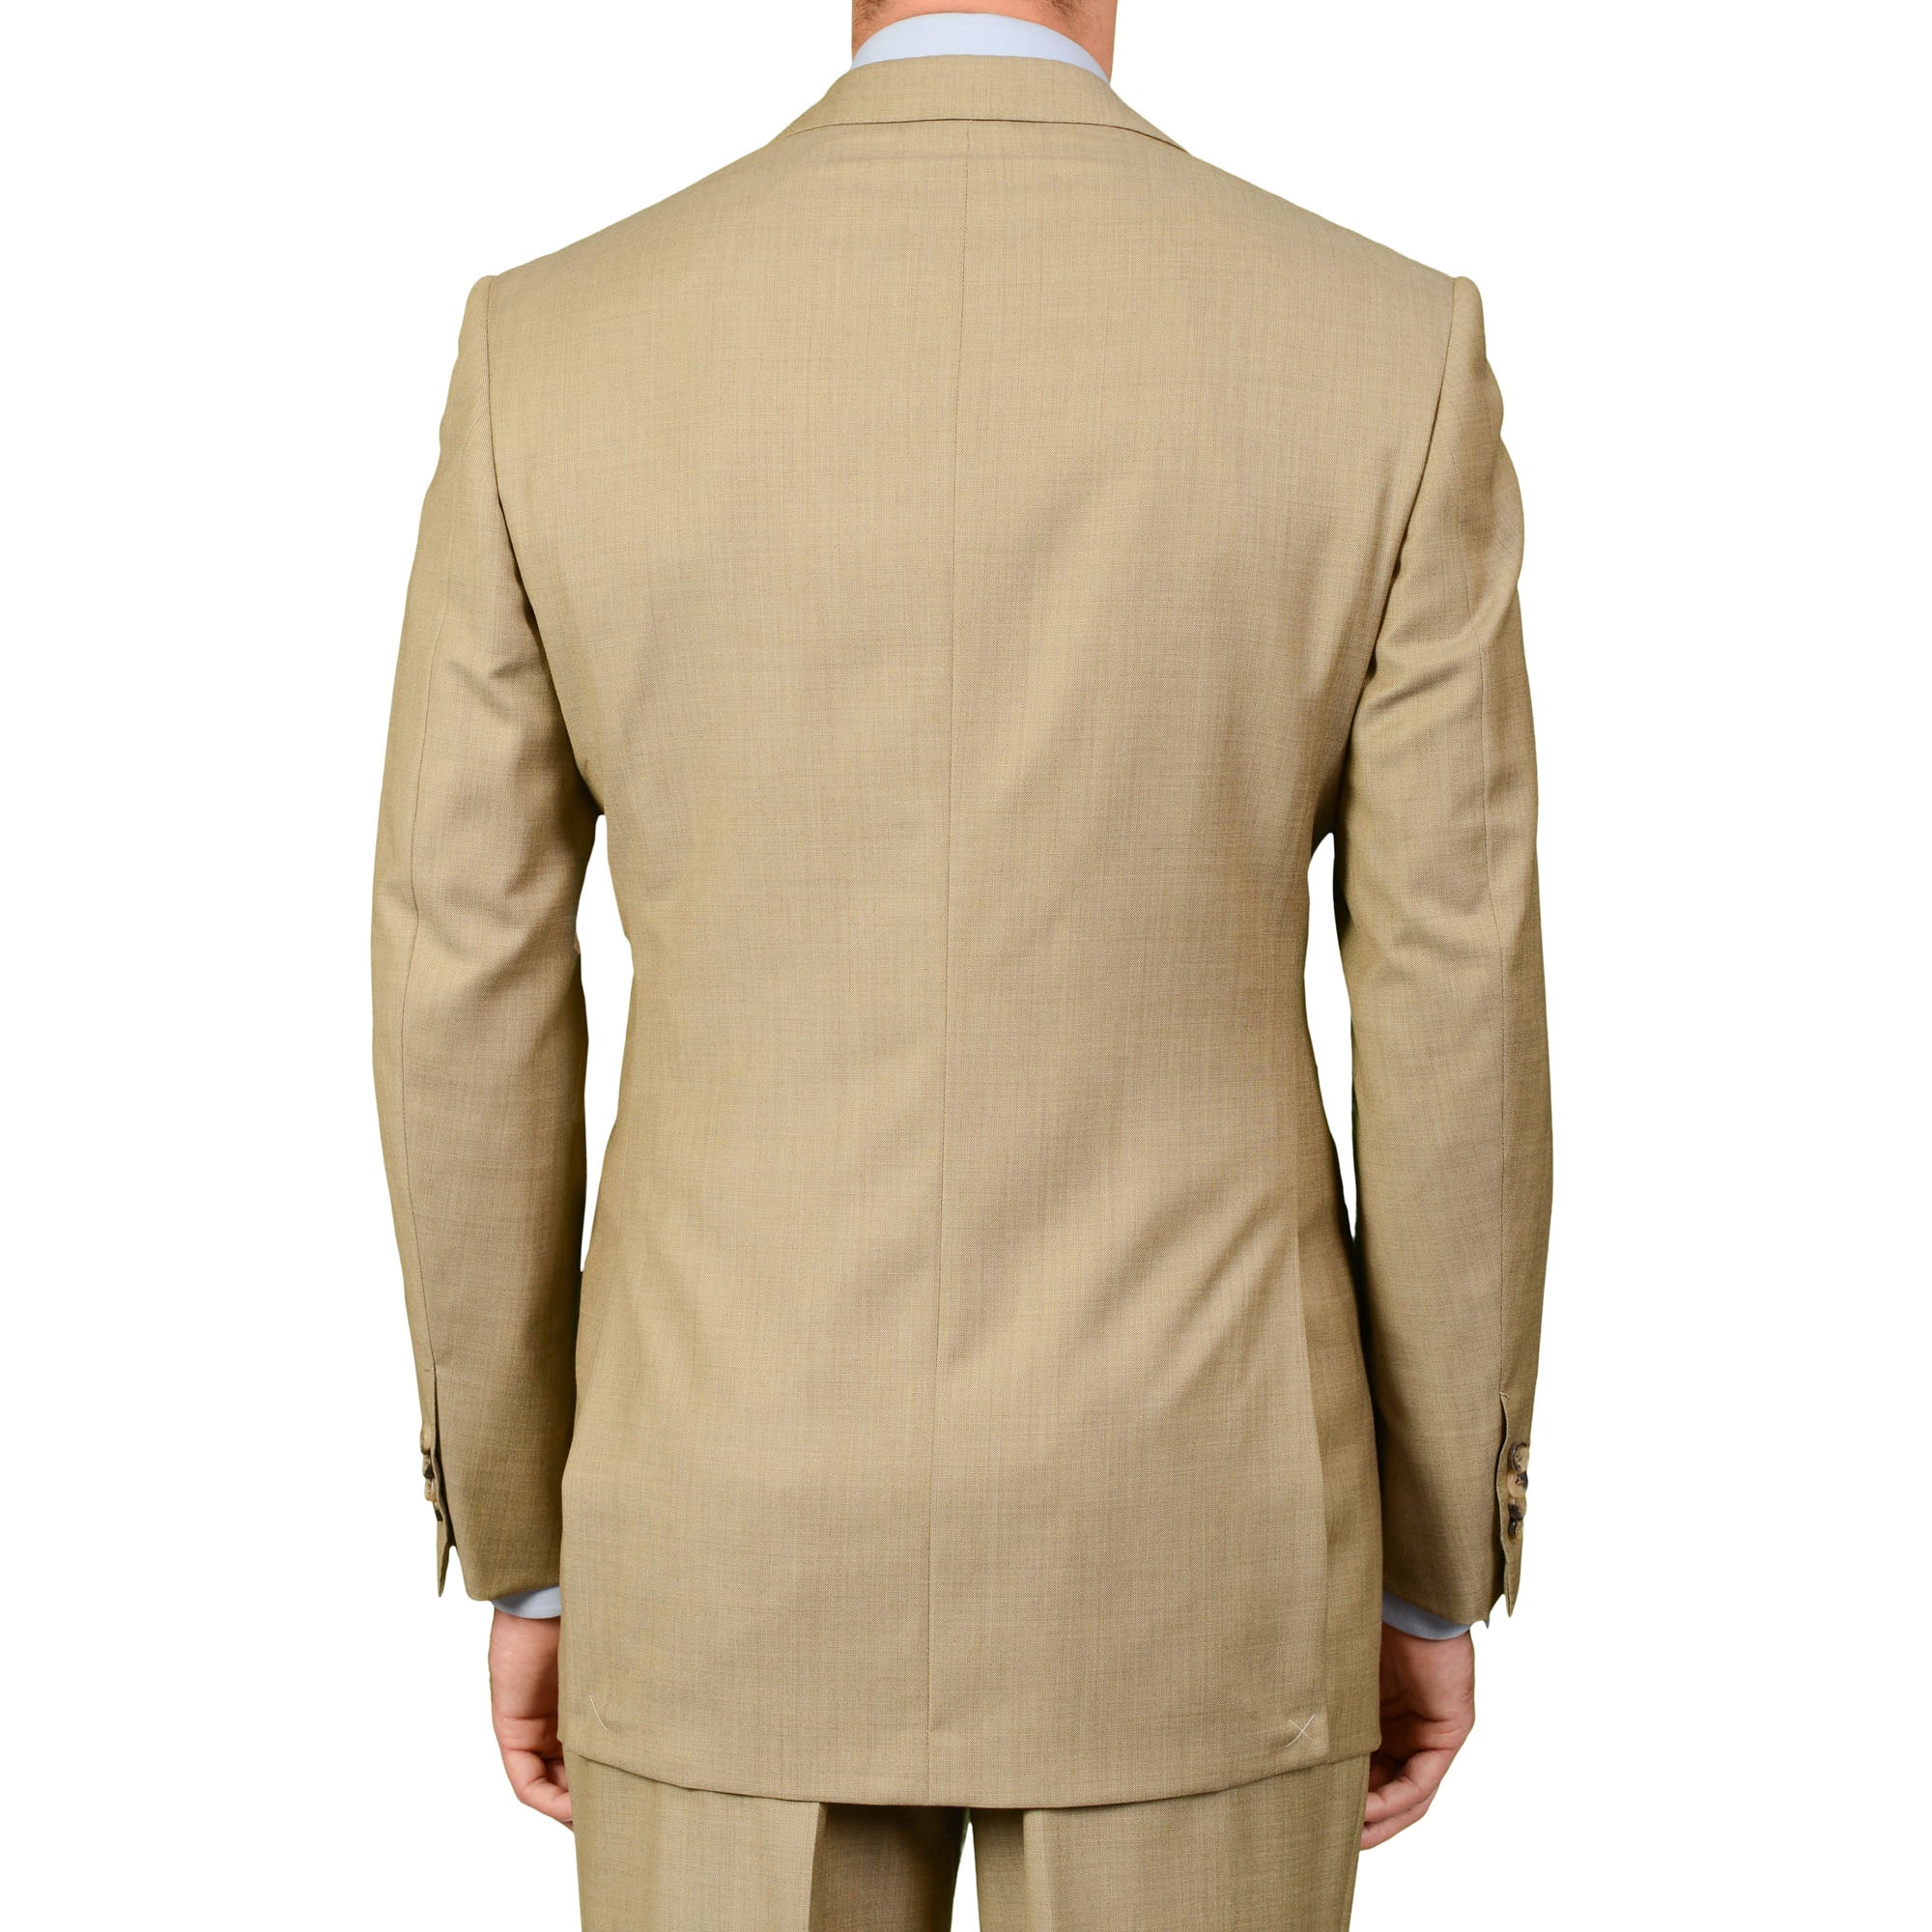 D'AVENZA Roma Handmade Beige Wool Suit EU 50 NEW US 40 Long